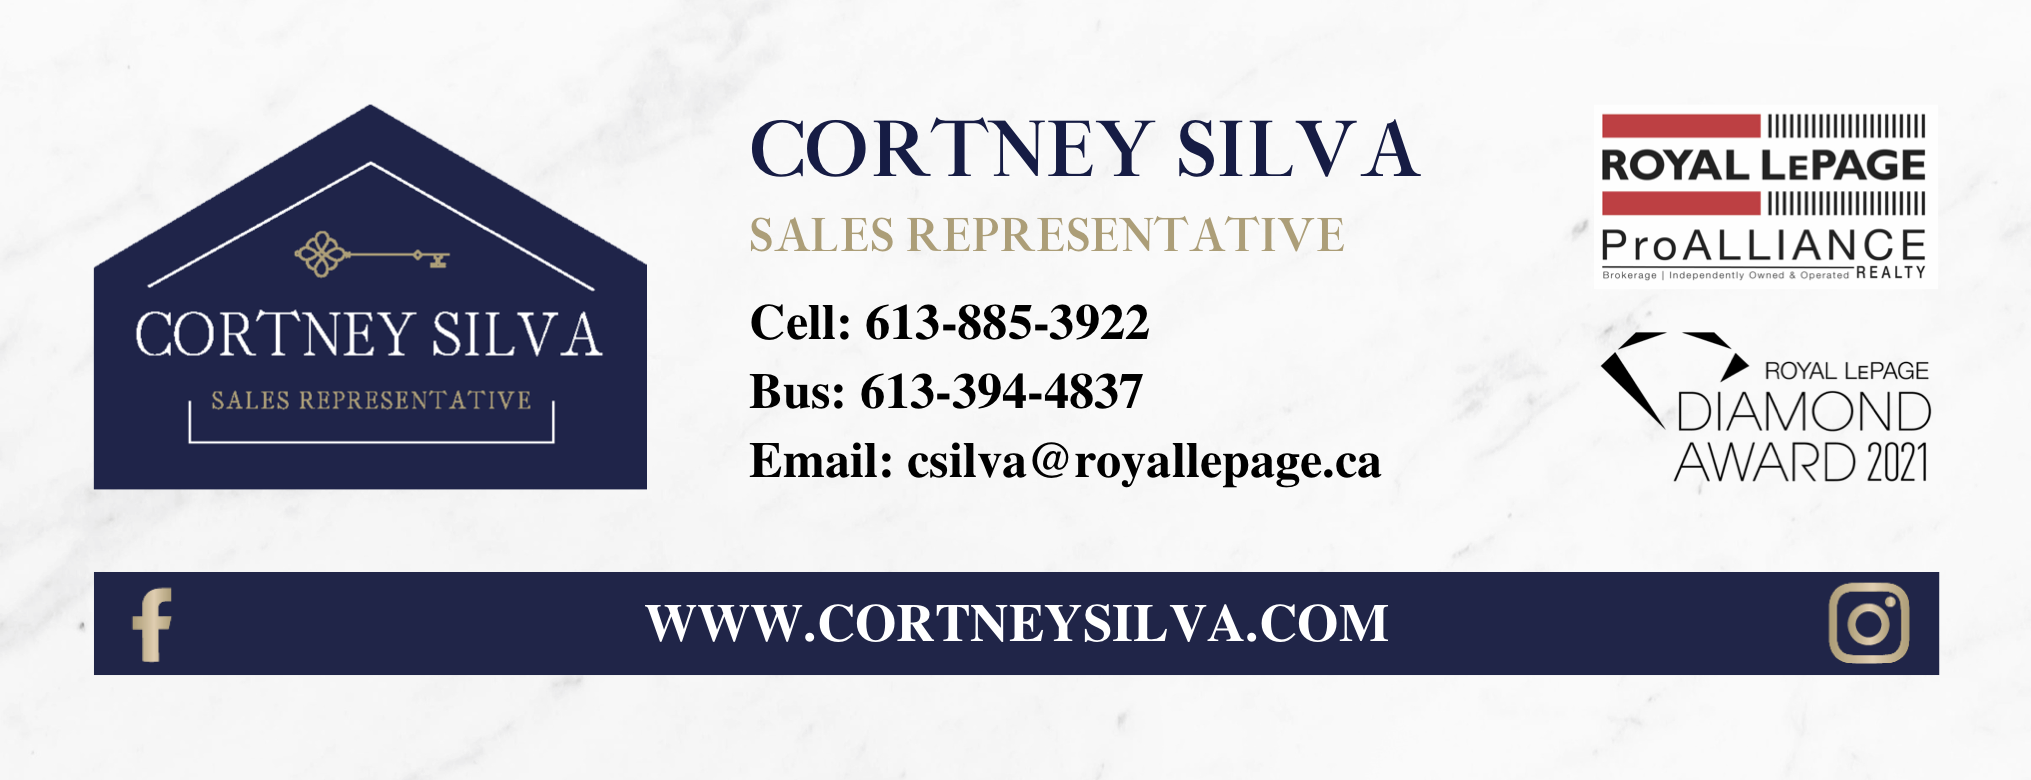 Cortney Silva, Sales Representative at Royal Lepage